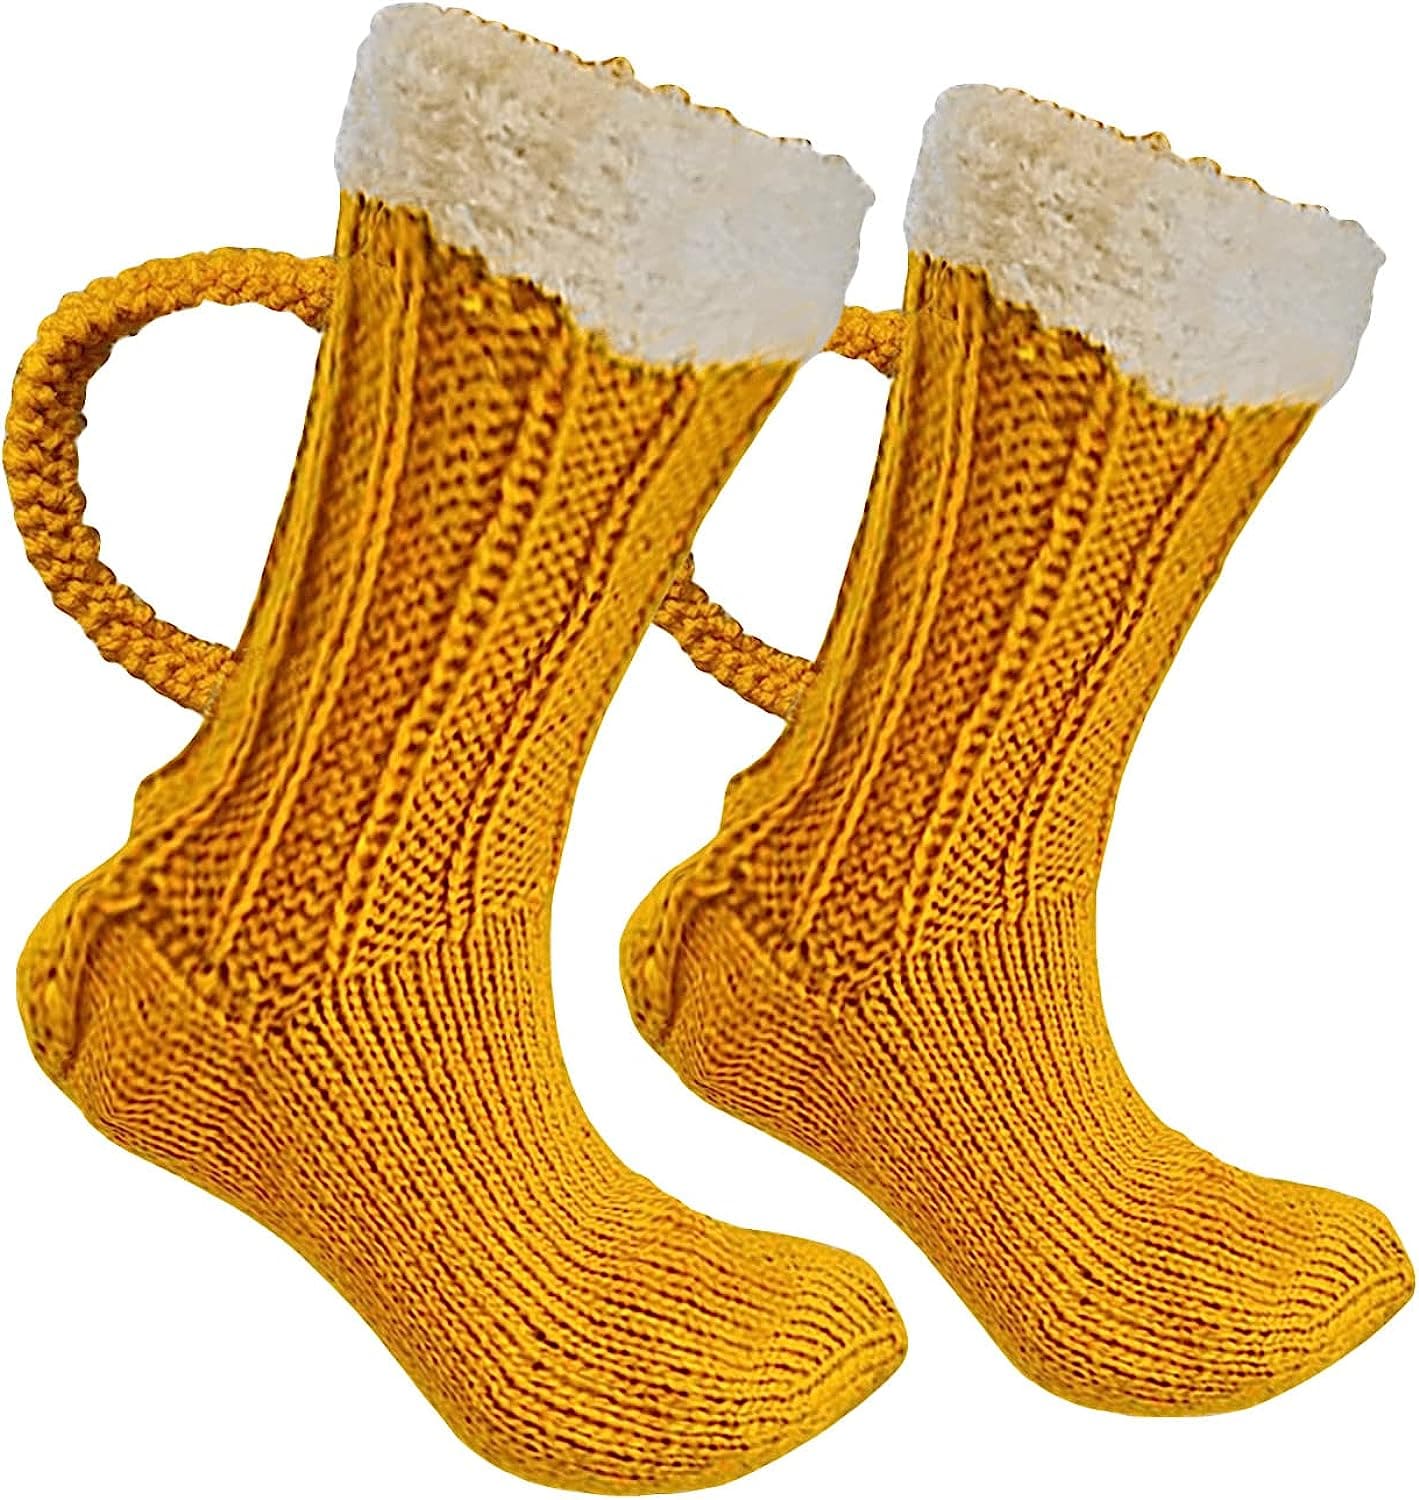 THATLILSHOP One Size / Beer Mug Women Men Novelty Animal Pattern Socks Crazy Funny Knit Crocodile Socks Funny Gifts